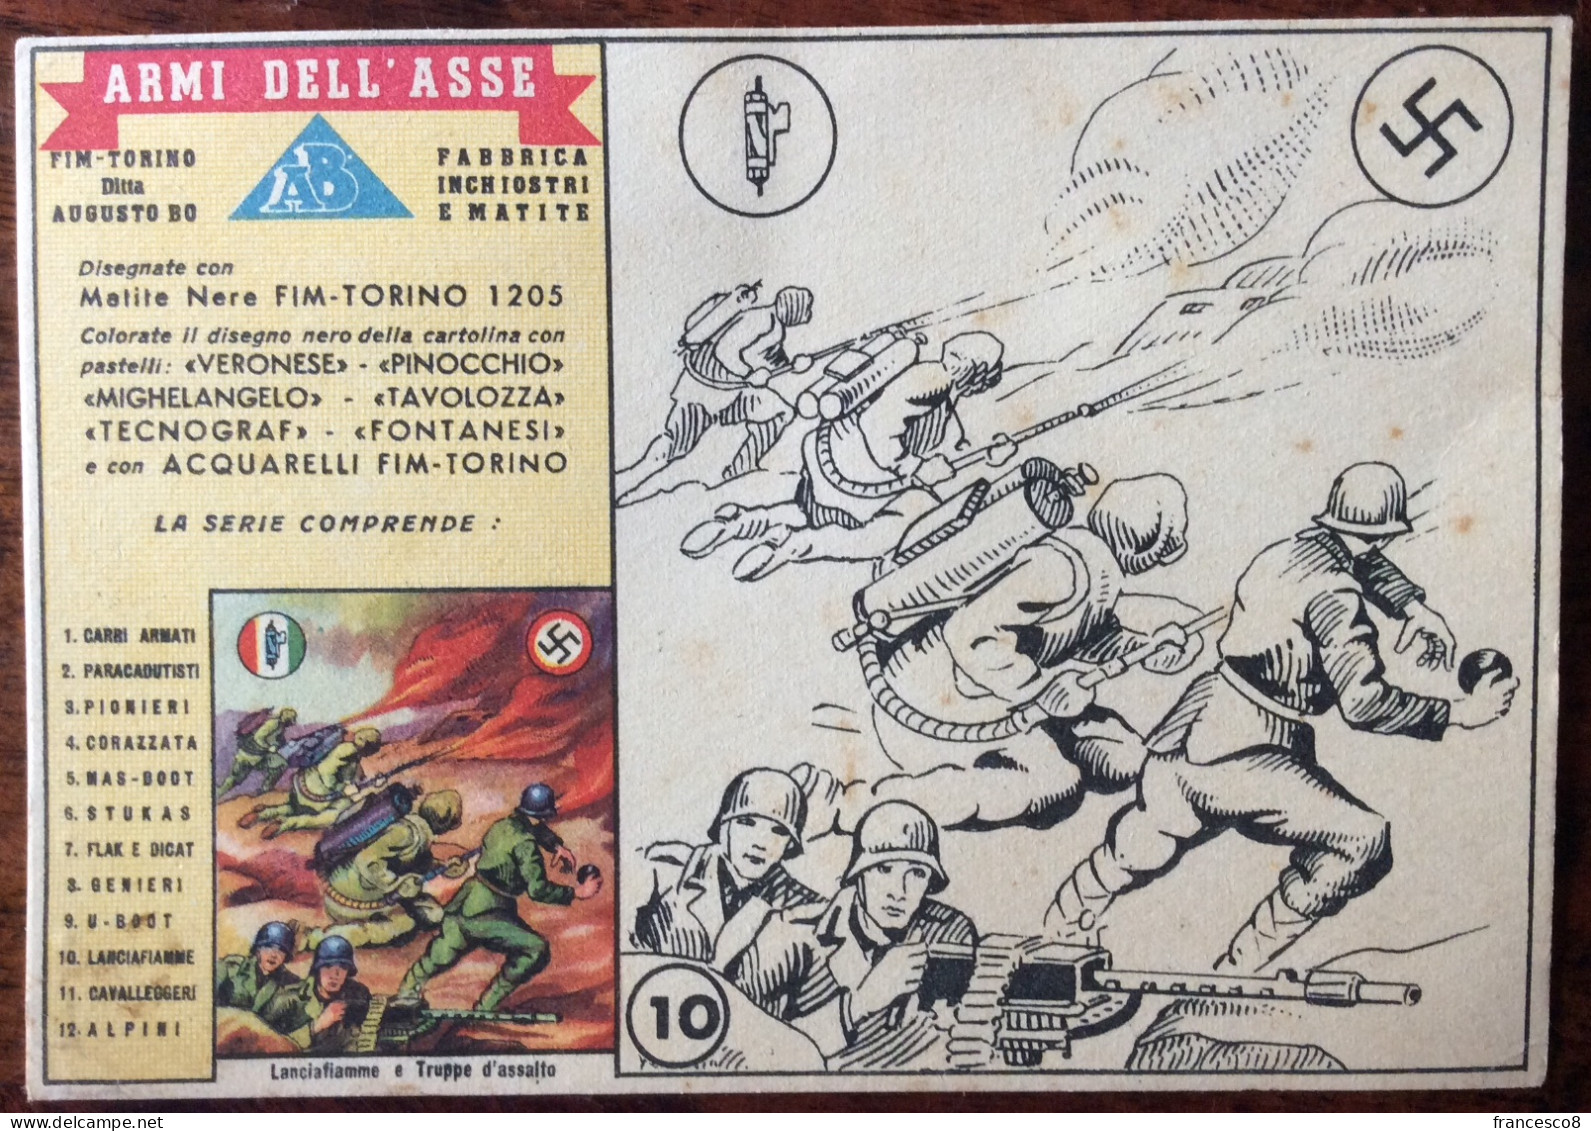 ARMI DELL'ASSE LANCIAFIAMME E TRUPPE D'ASSALTO / Fascismo - Weltkrieg 1939-45